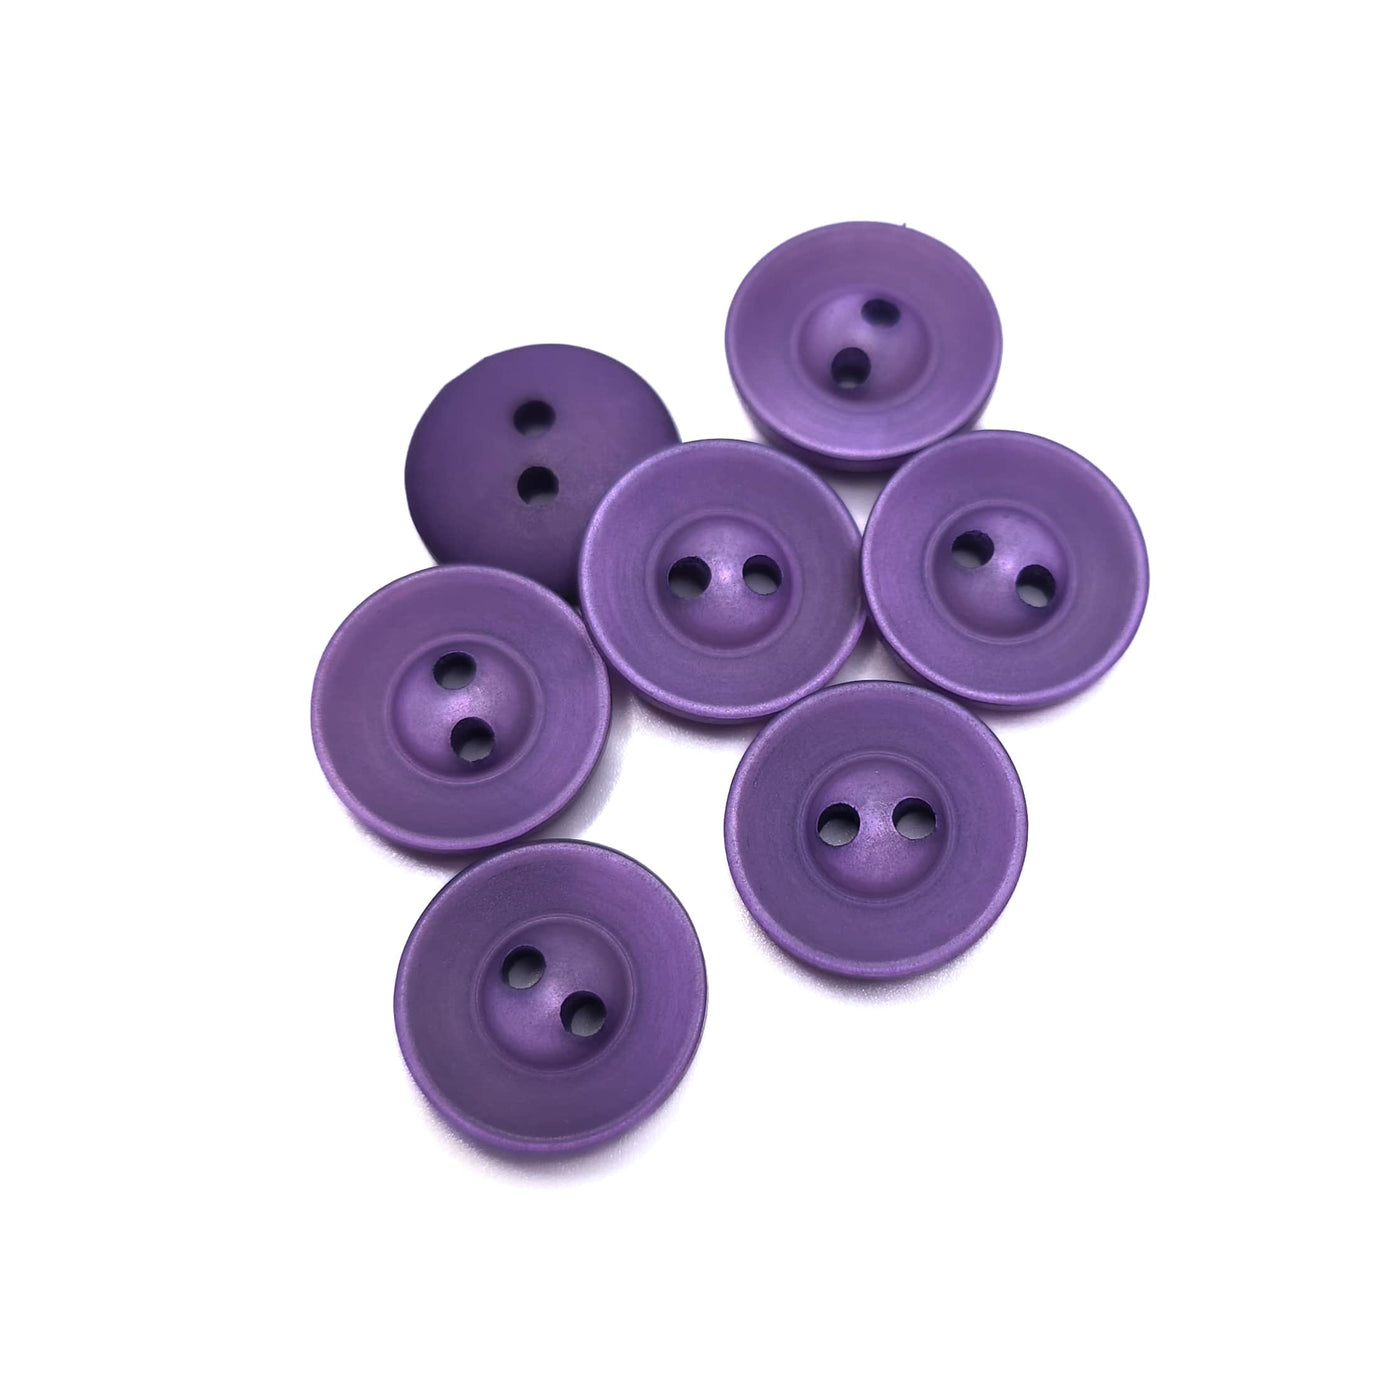 Buttons #41 - 15 mm